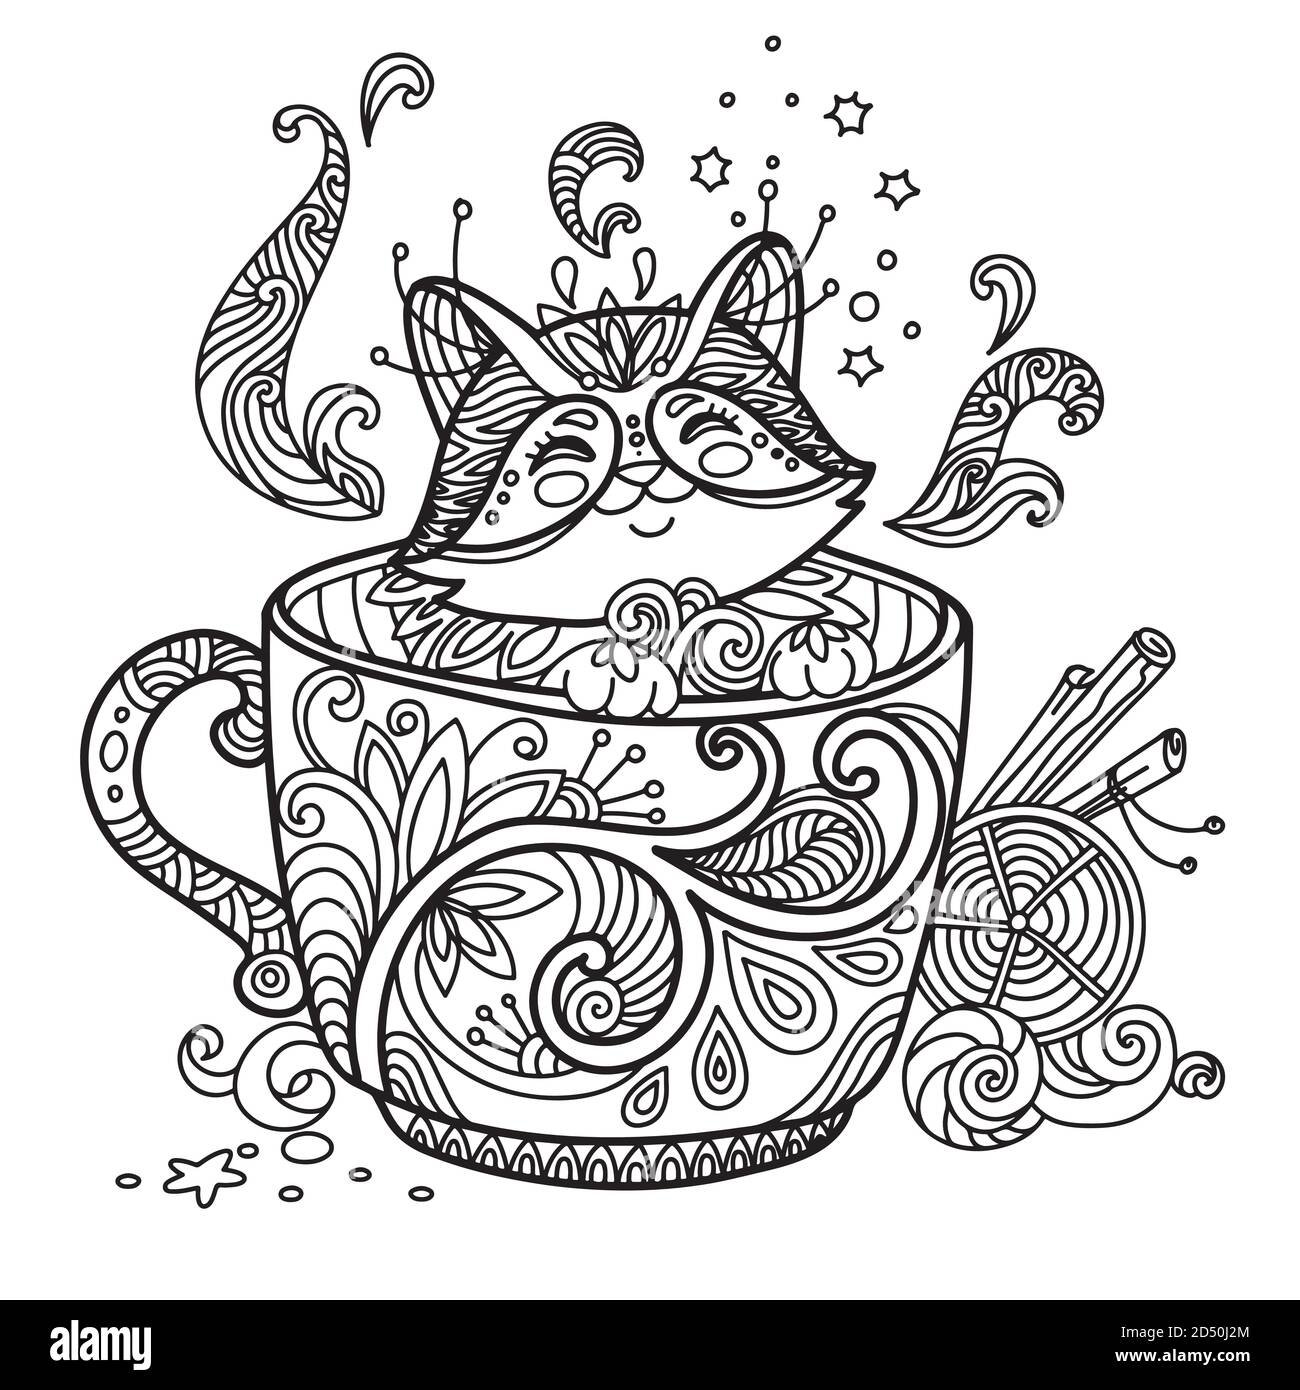 Coloring book sleepy cat in a mug